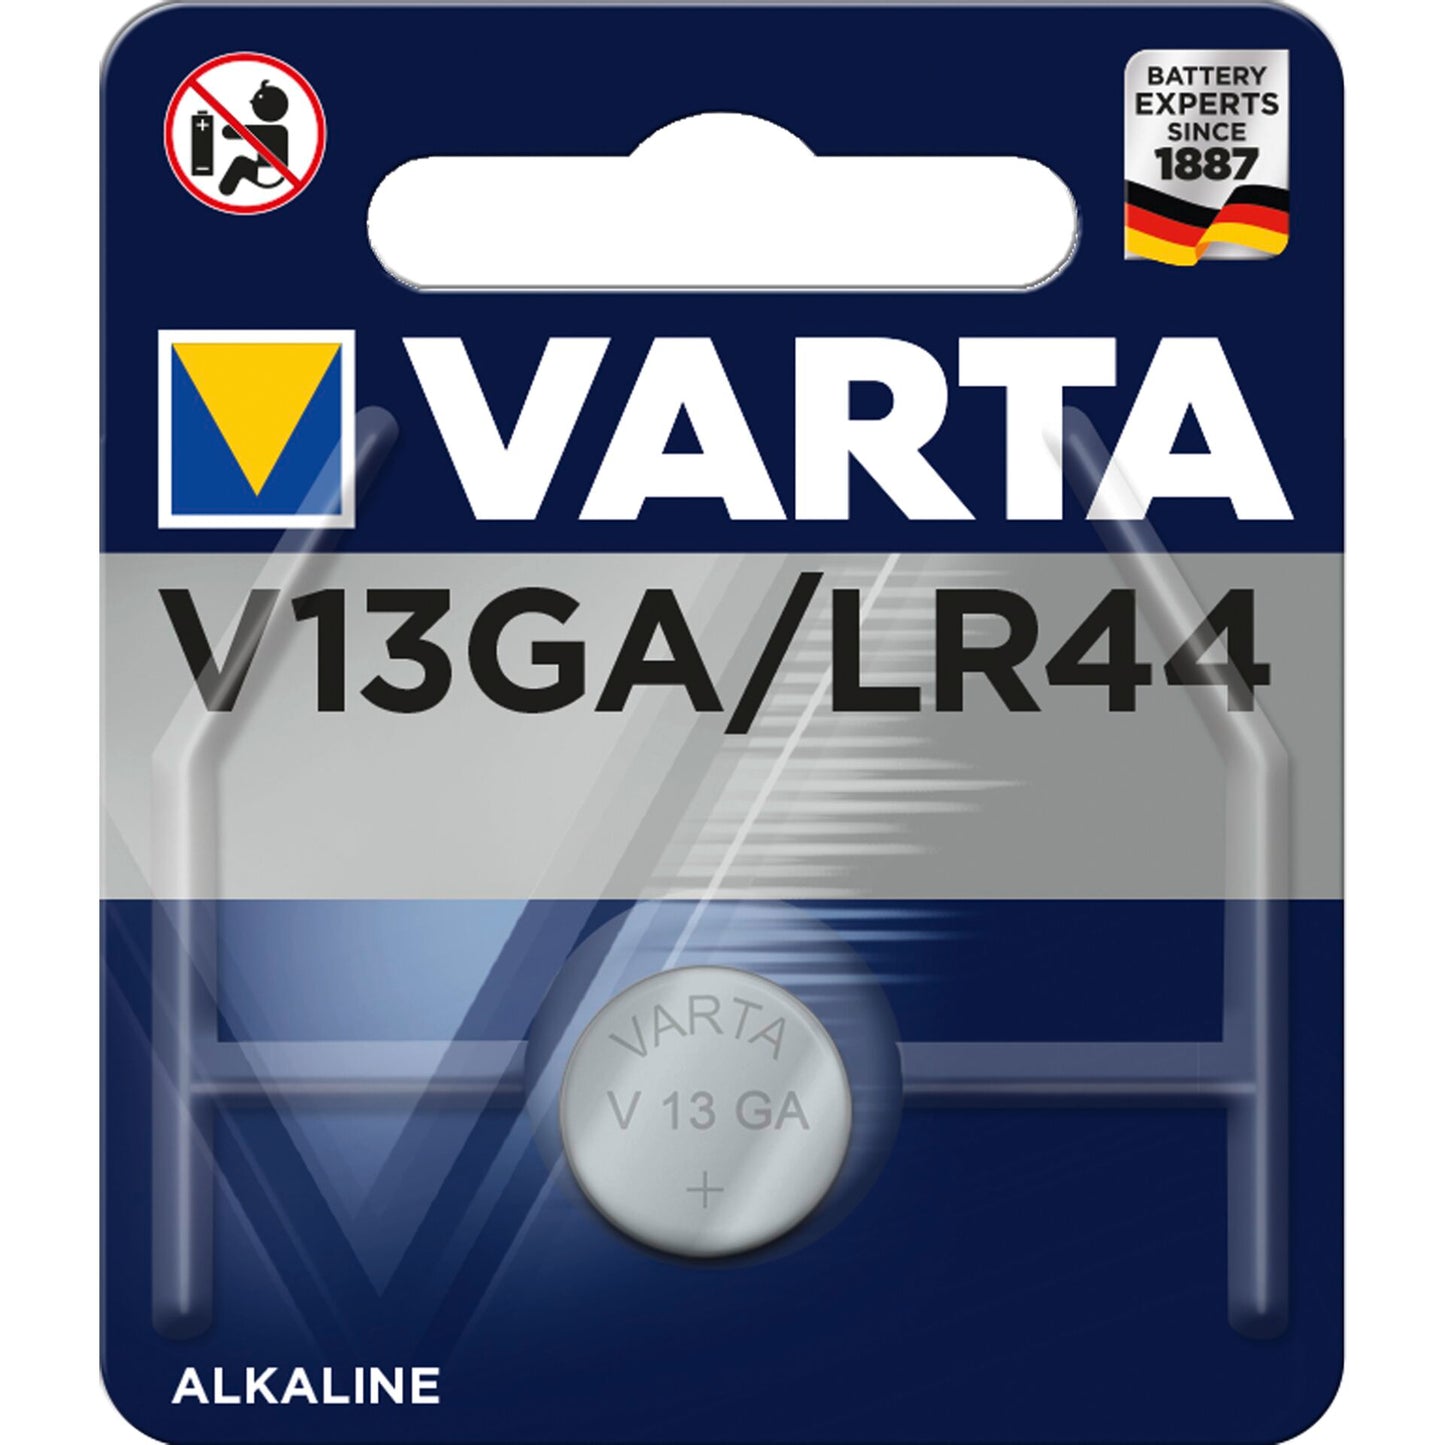 Varta 2x LR44 / V13GA 1.5V alkaliparisto